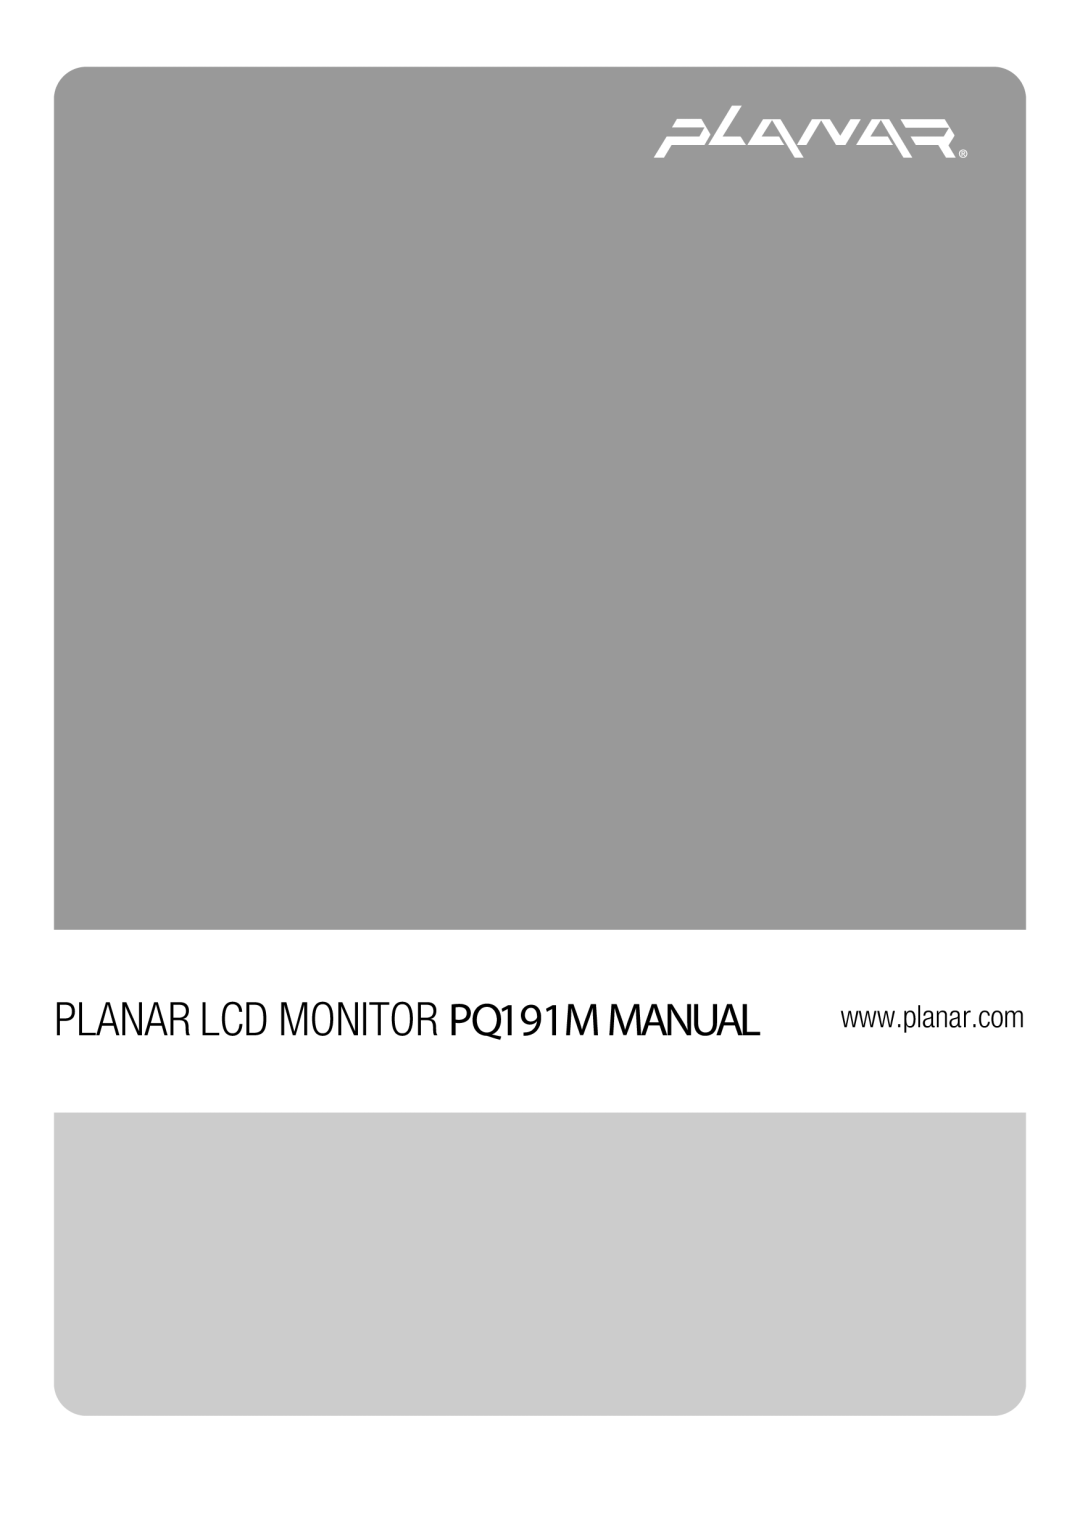 Planar manual PLANAR LCD MONITOR PQ191M MANUAL 